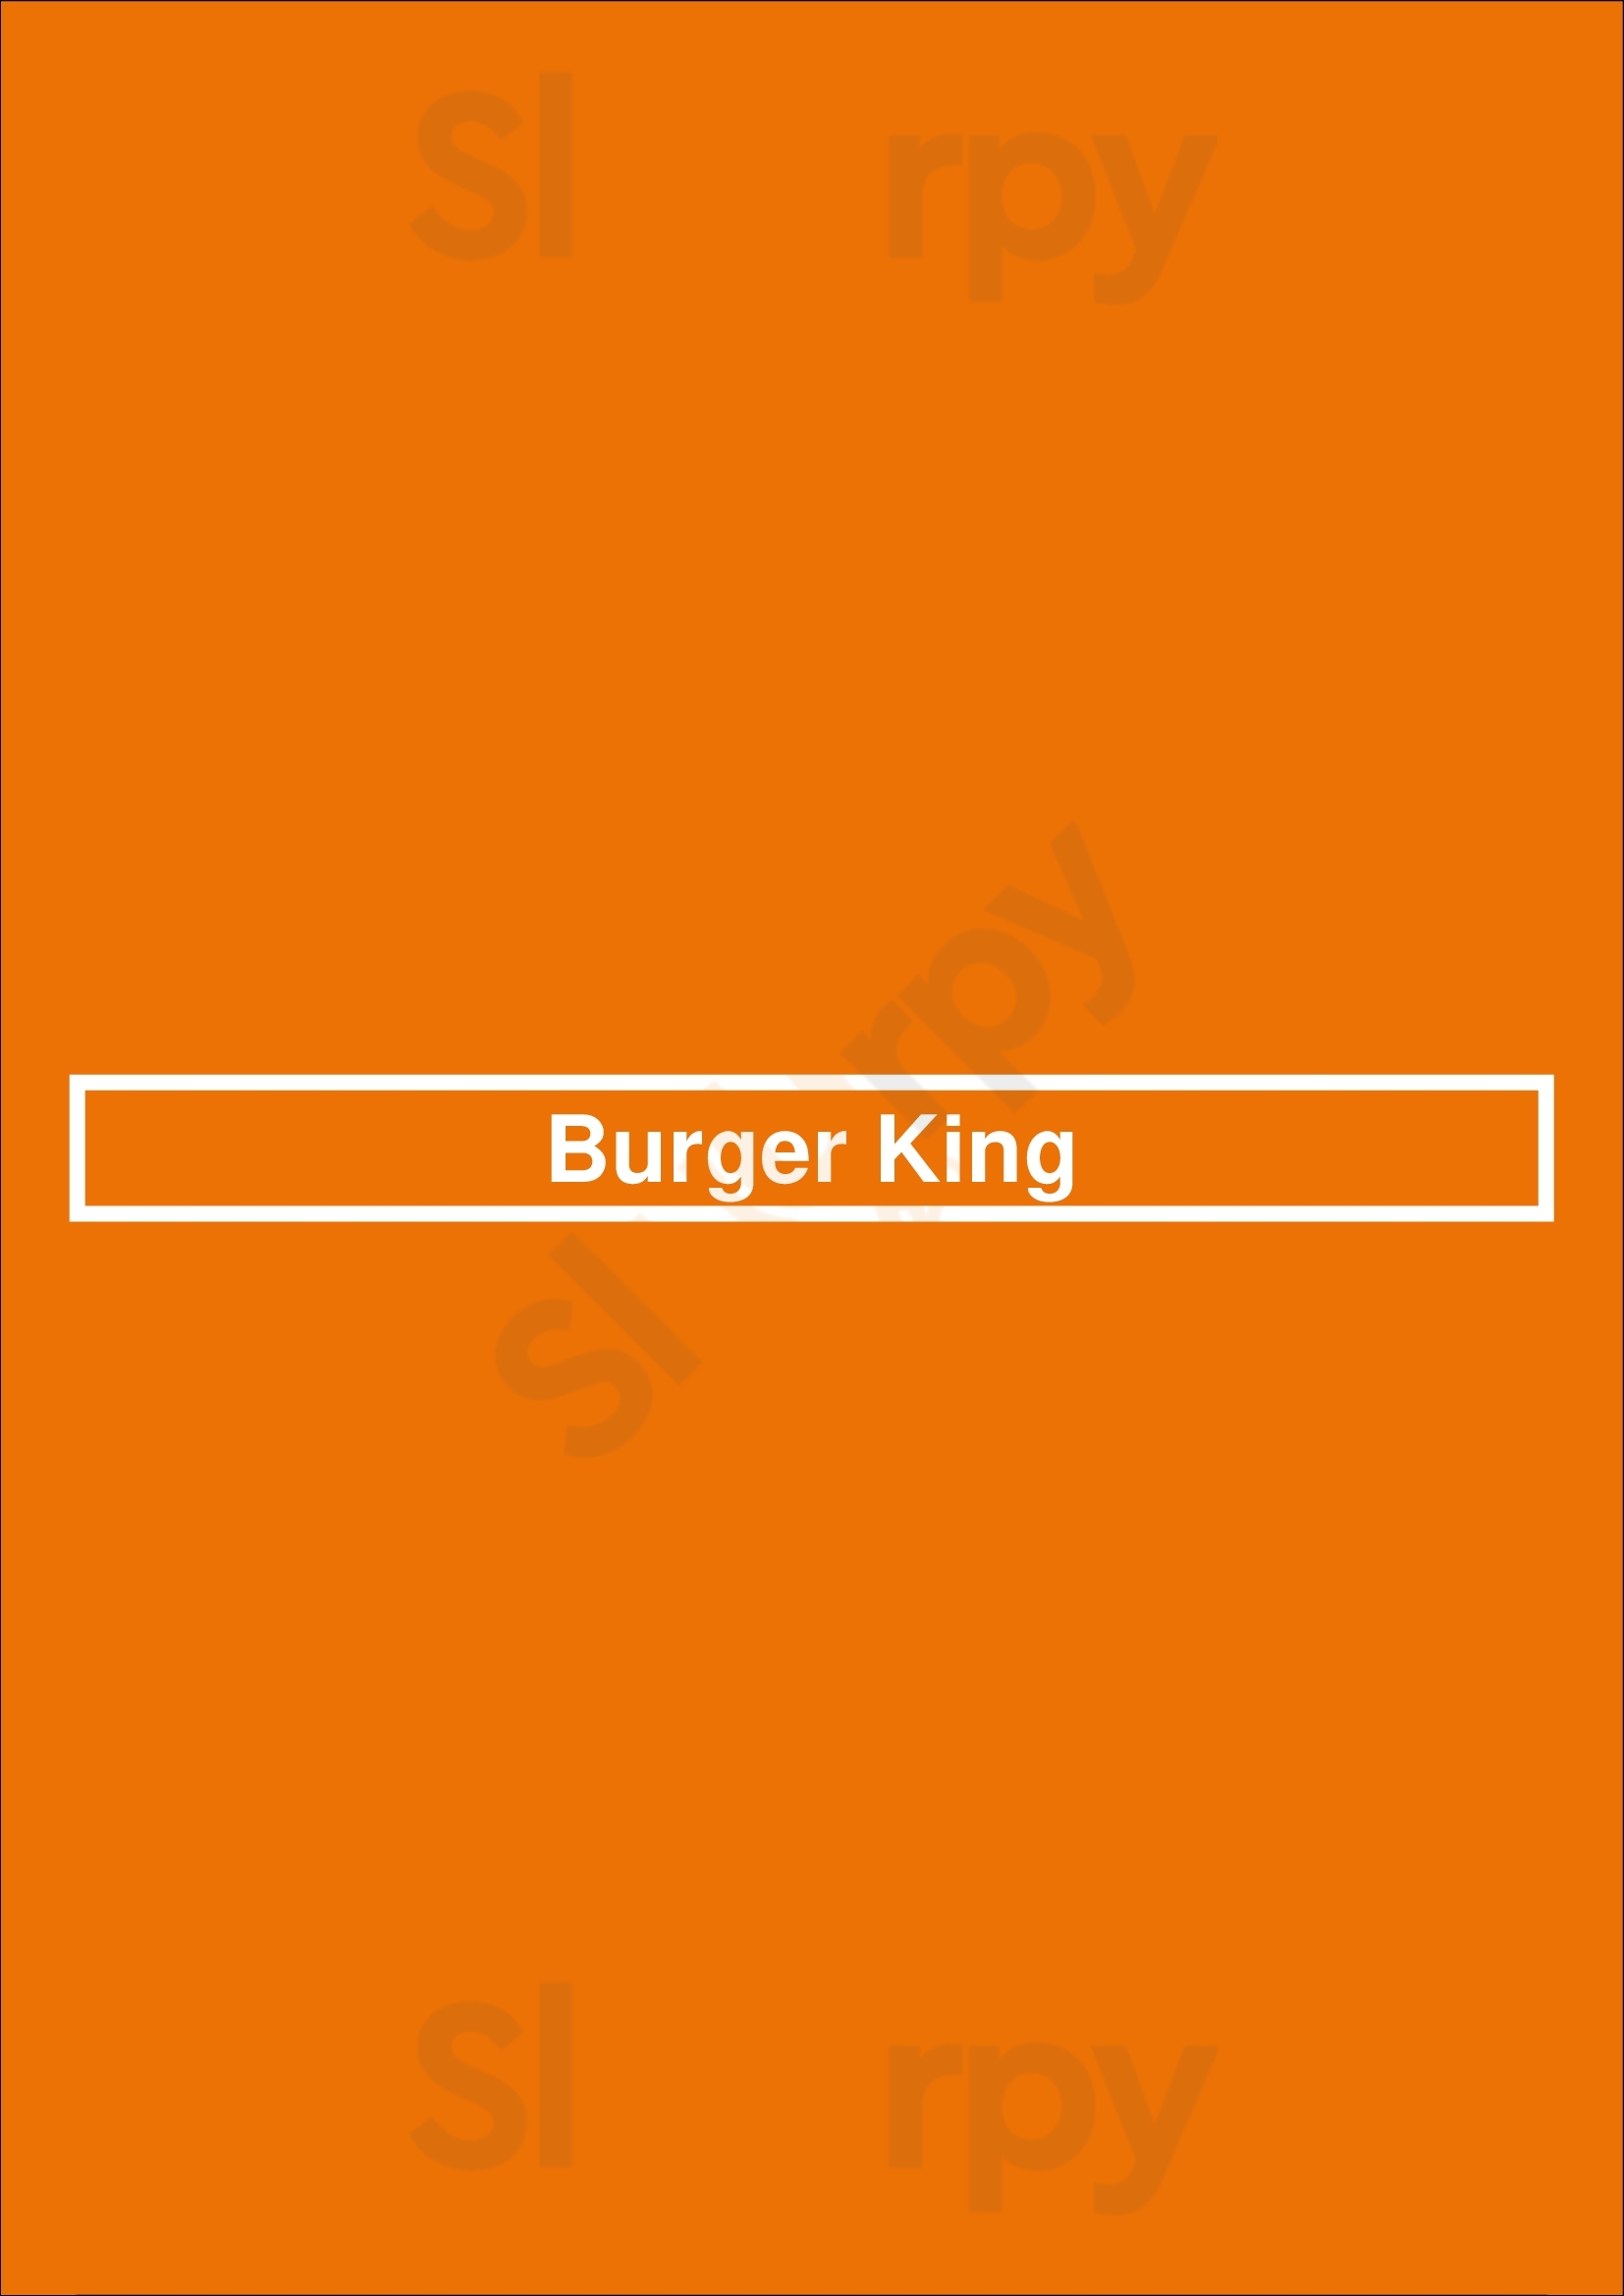 Burger King Austin Menu - 1